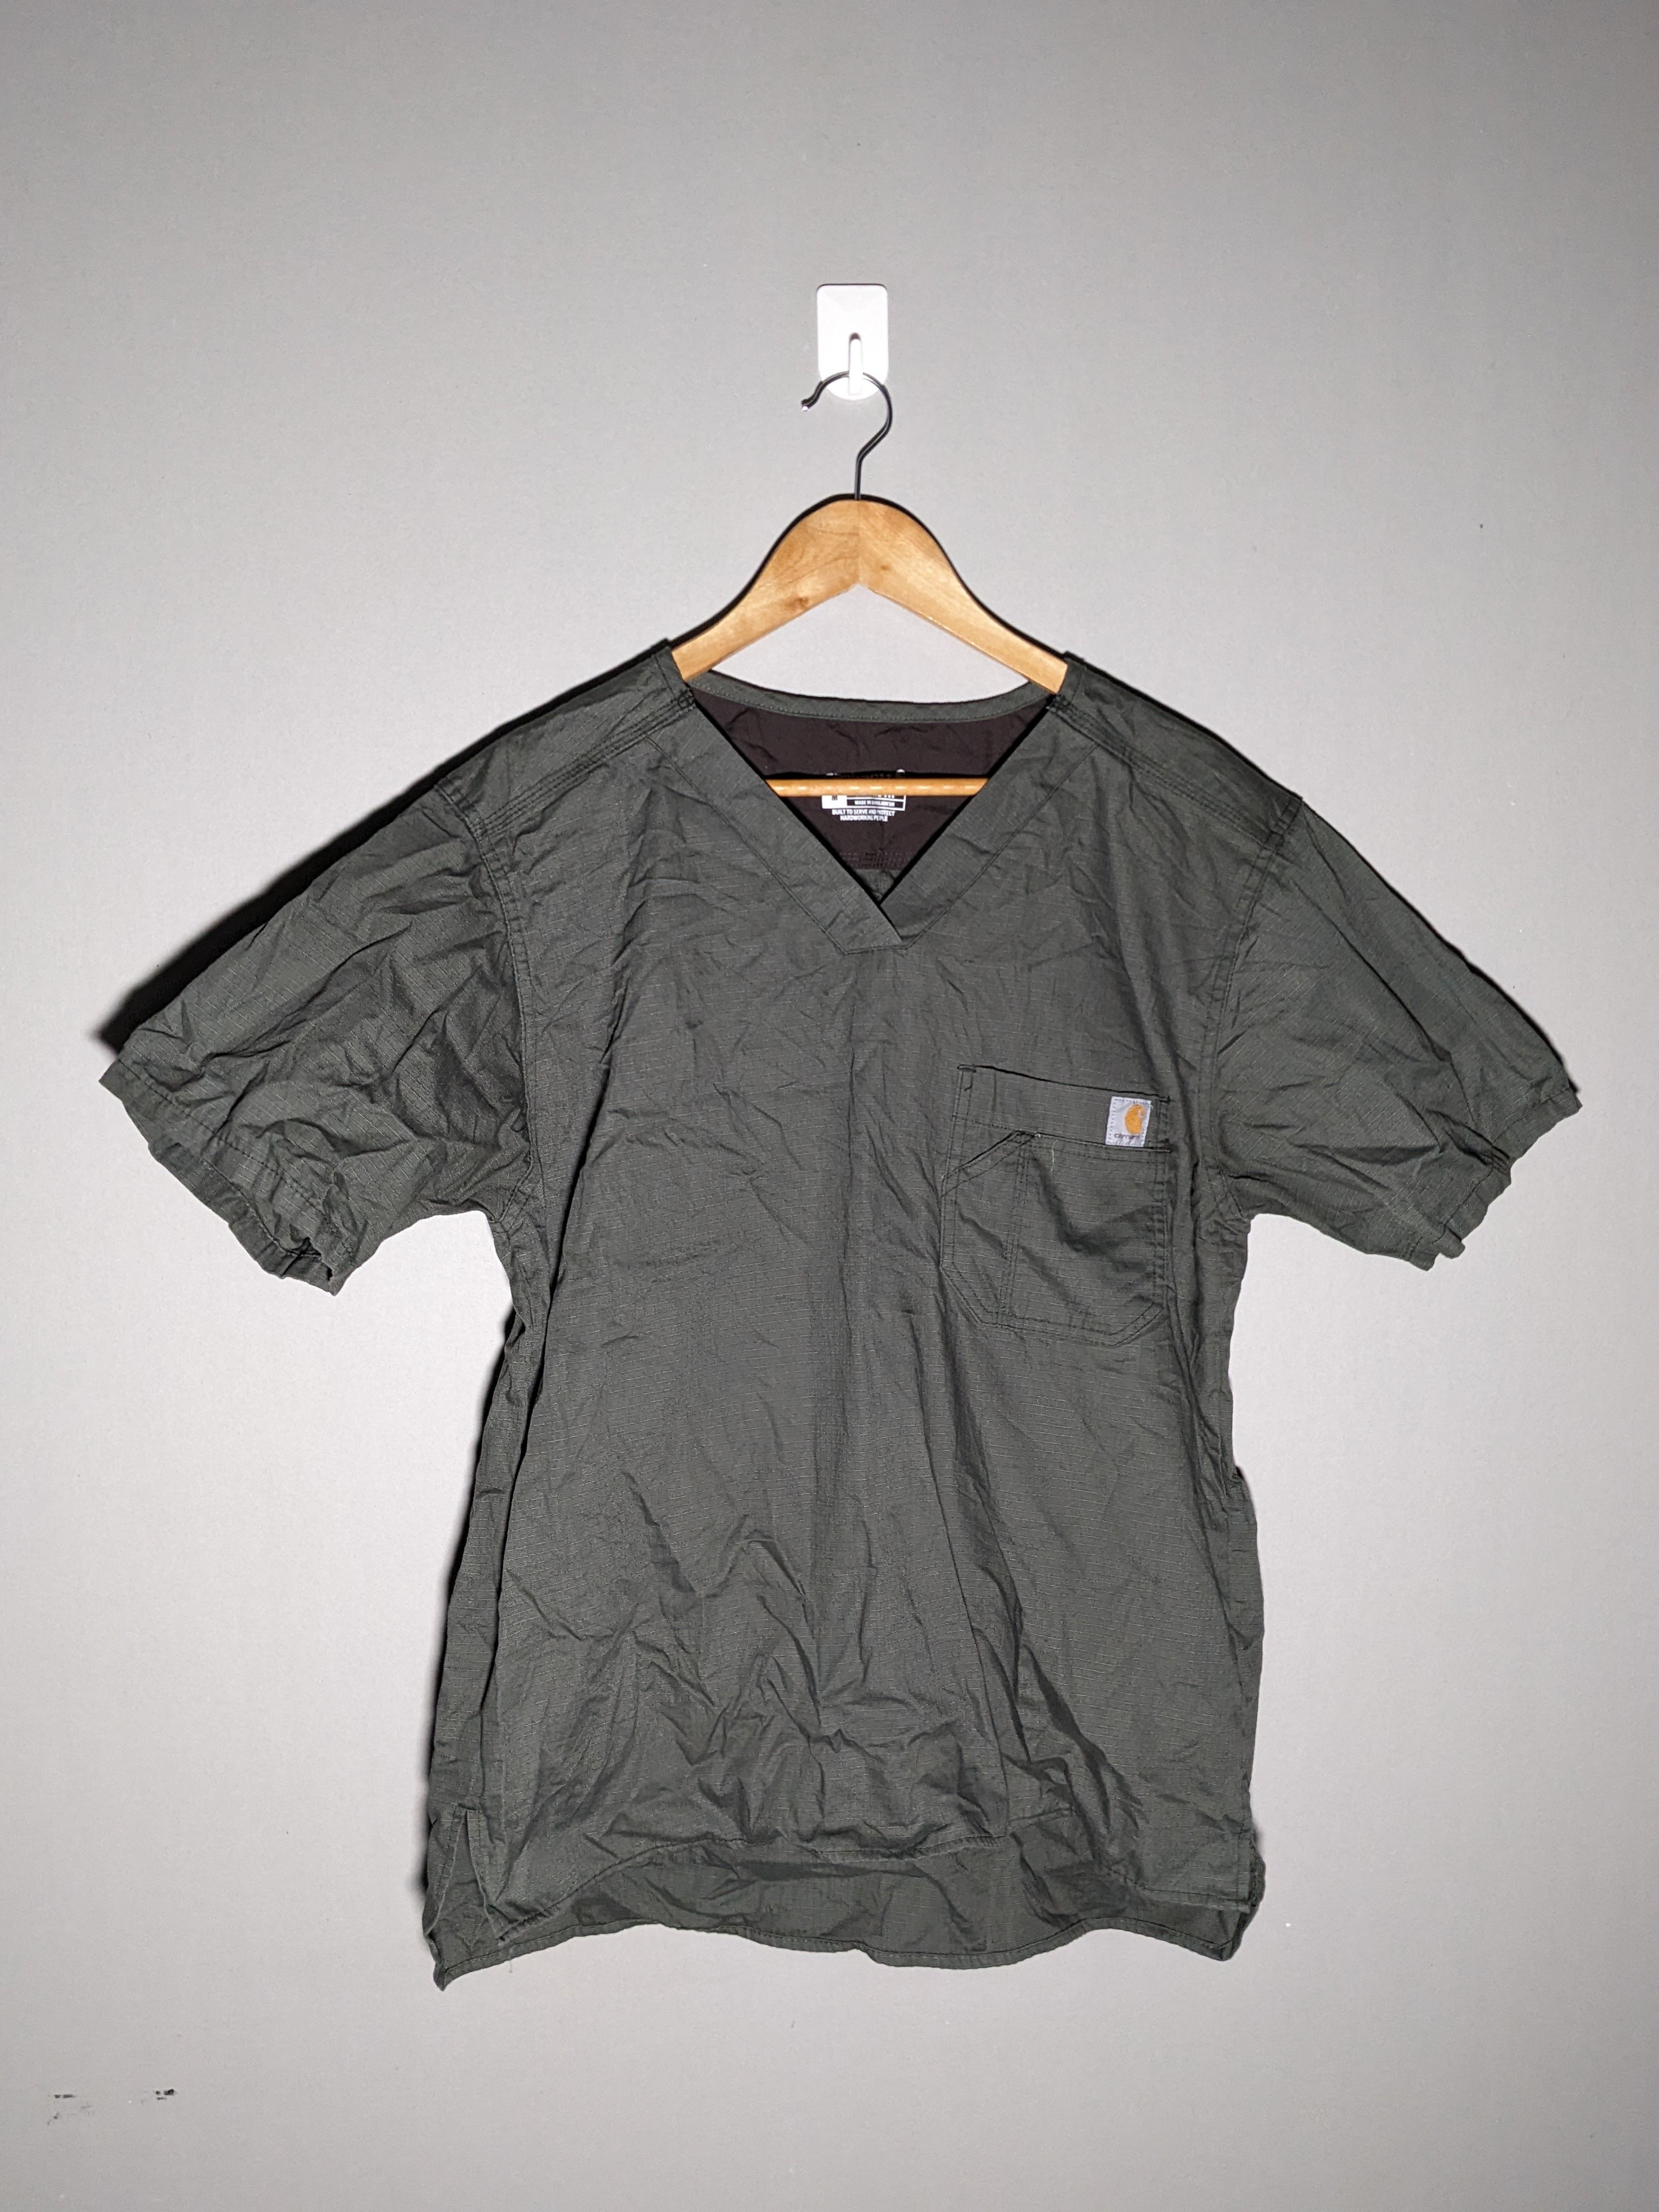 Carhartt Scrub Shirt Top Army Green Size M - 1